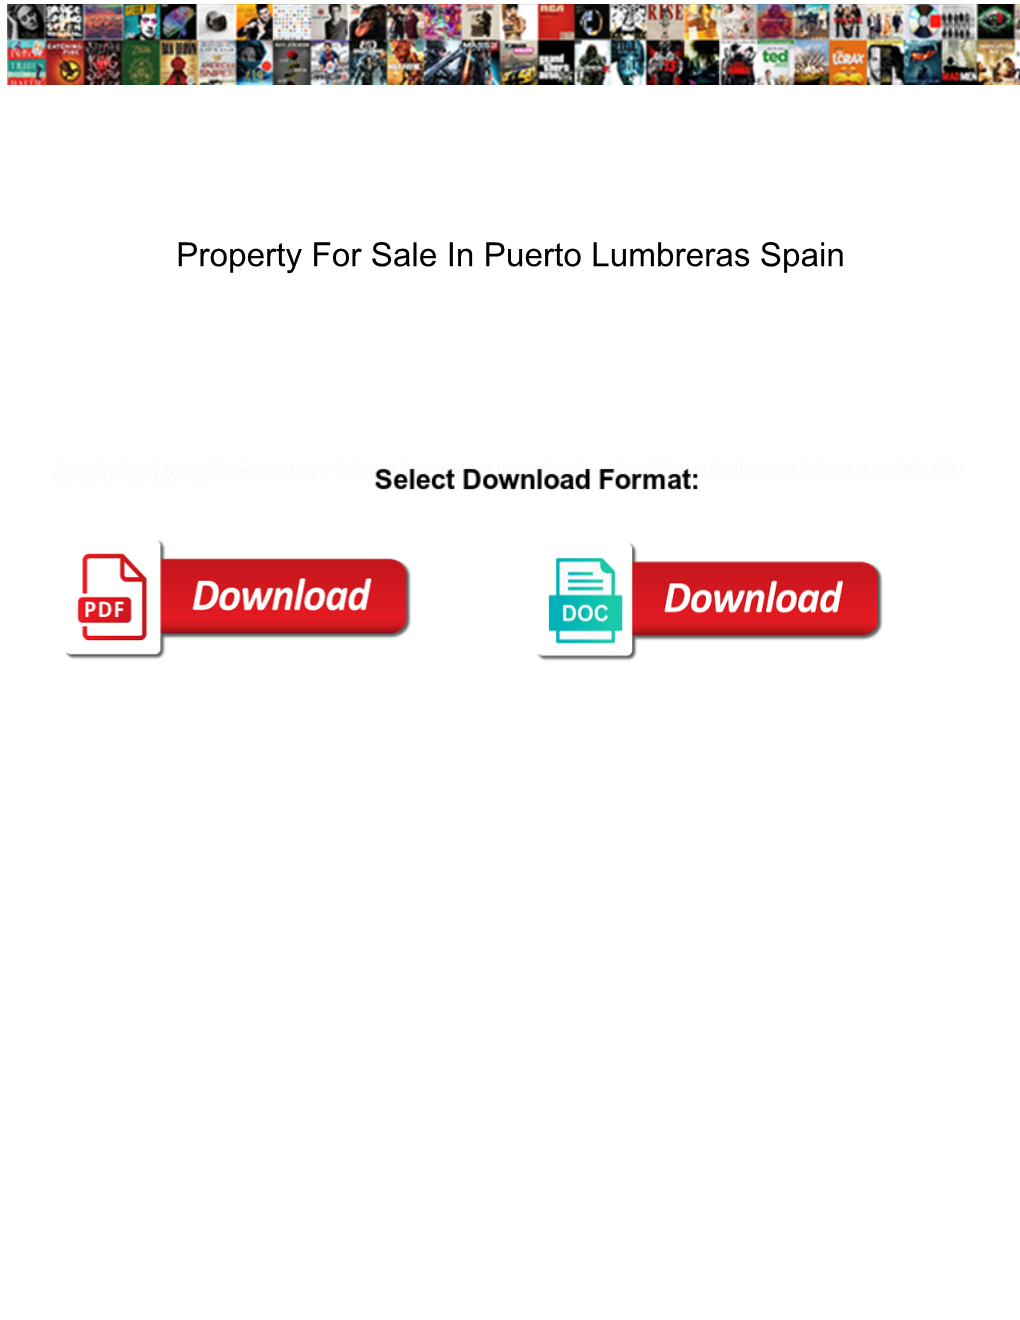 Property for Sale in Puerto Lumbreras Spain